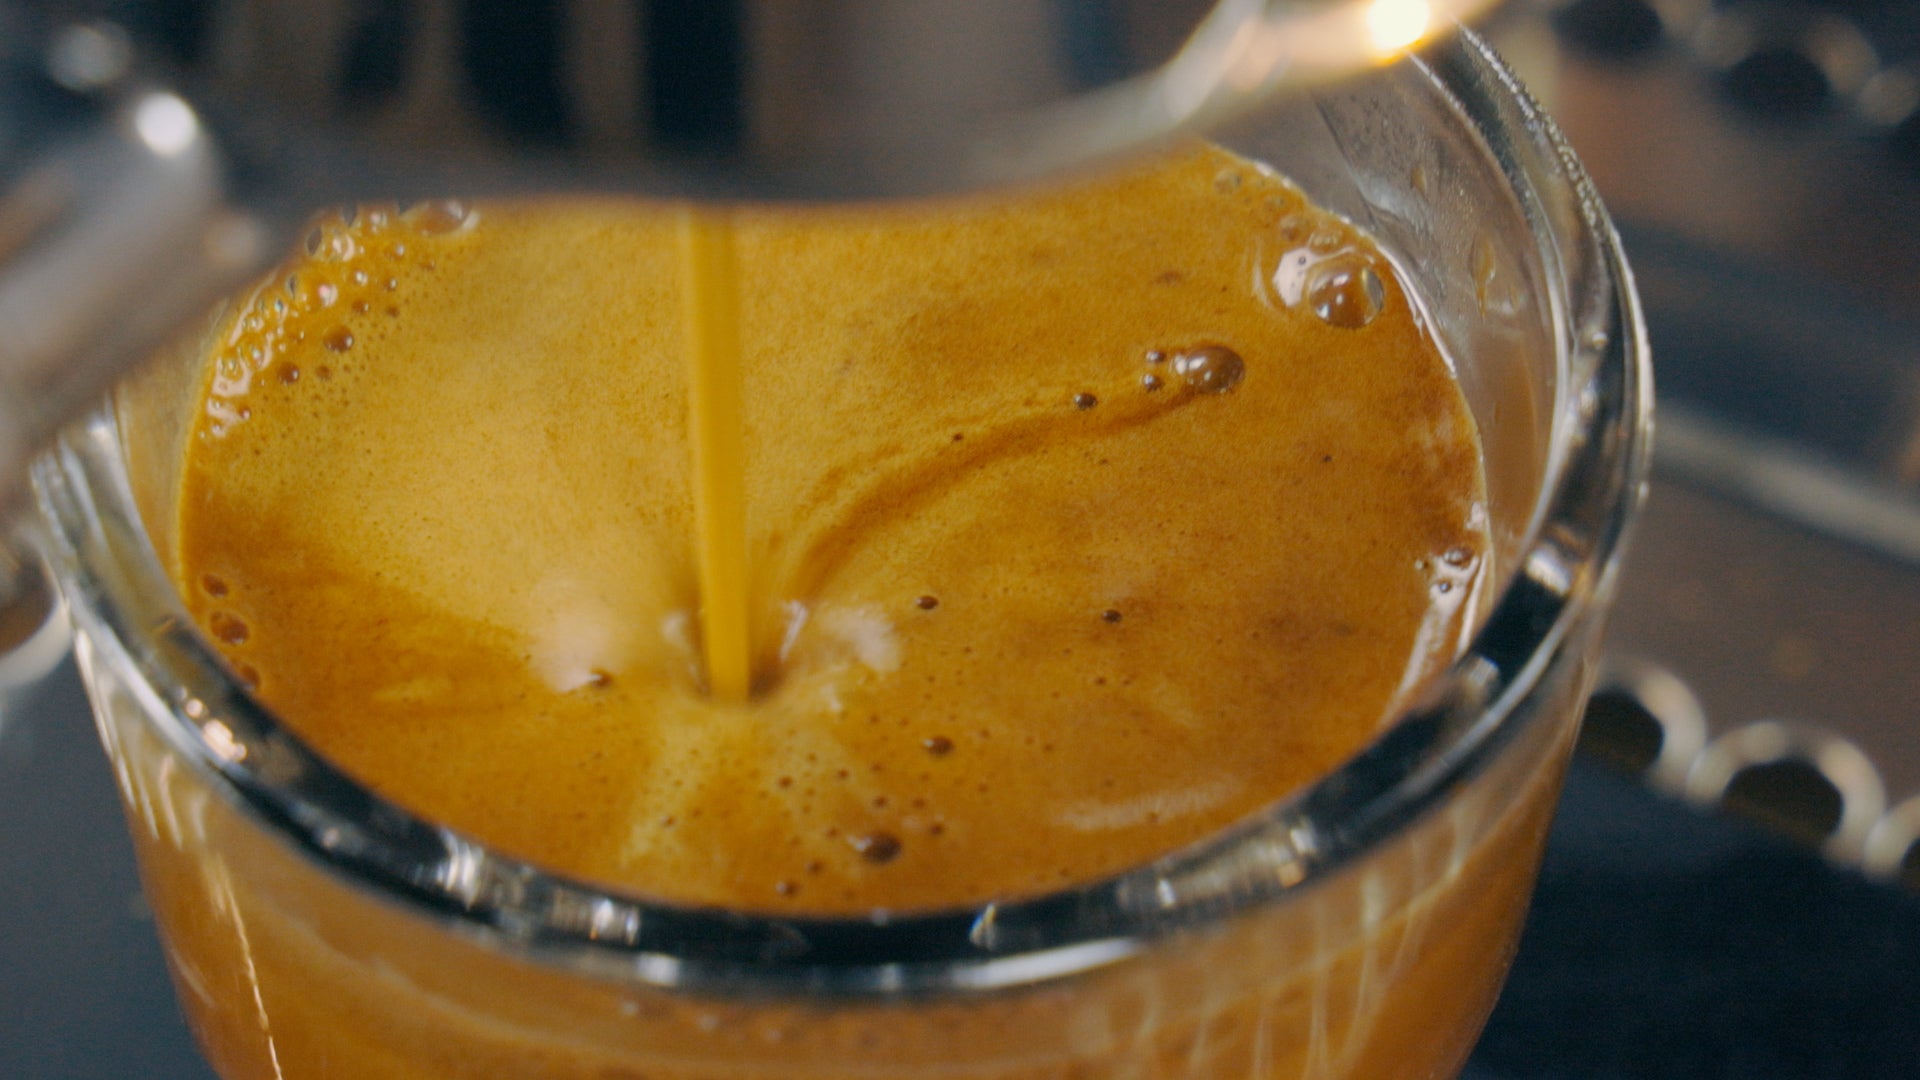 Espresso Crema? What – Clive Coffee is